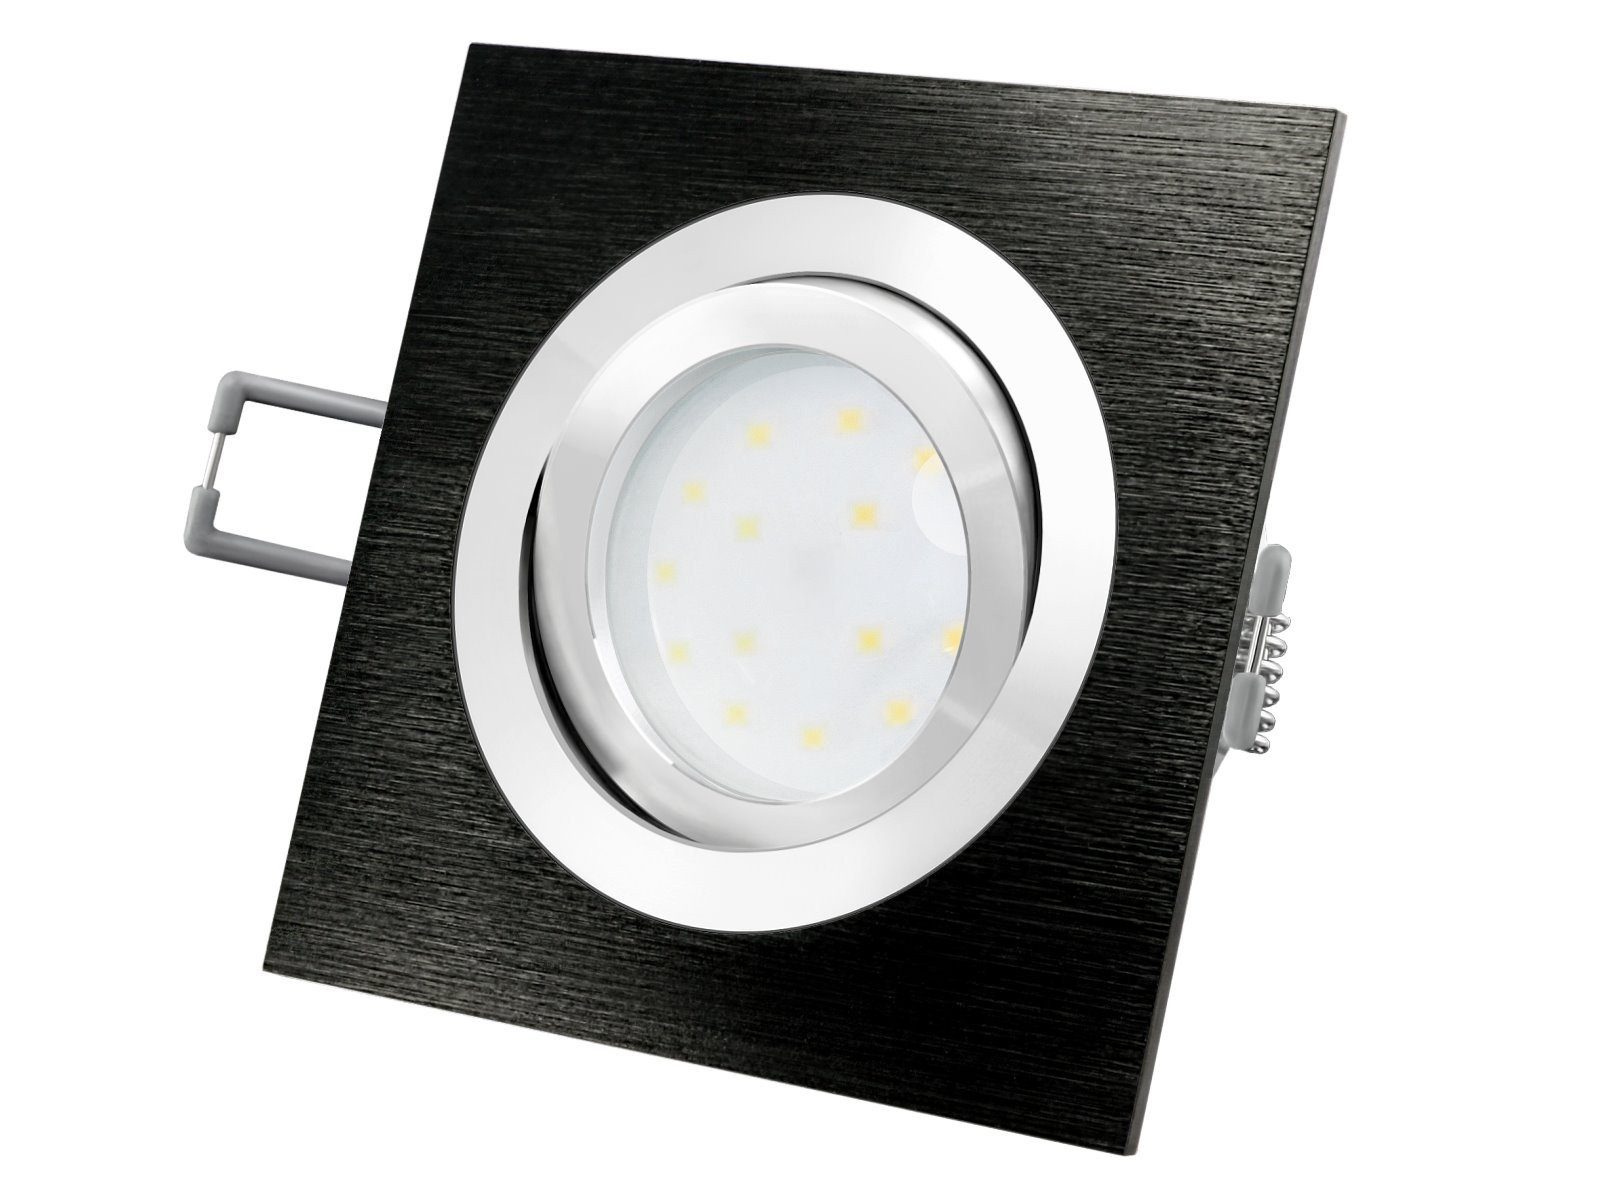 SSC-LUXon LED Einbaustrahler QF-2 LED-Einbauleuchte Alu schwarz schwenkbar flach, LED-Modul 230V, Neutralweiß